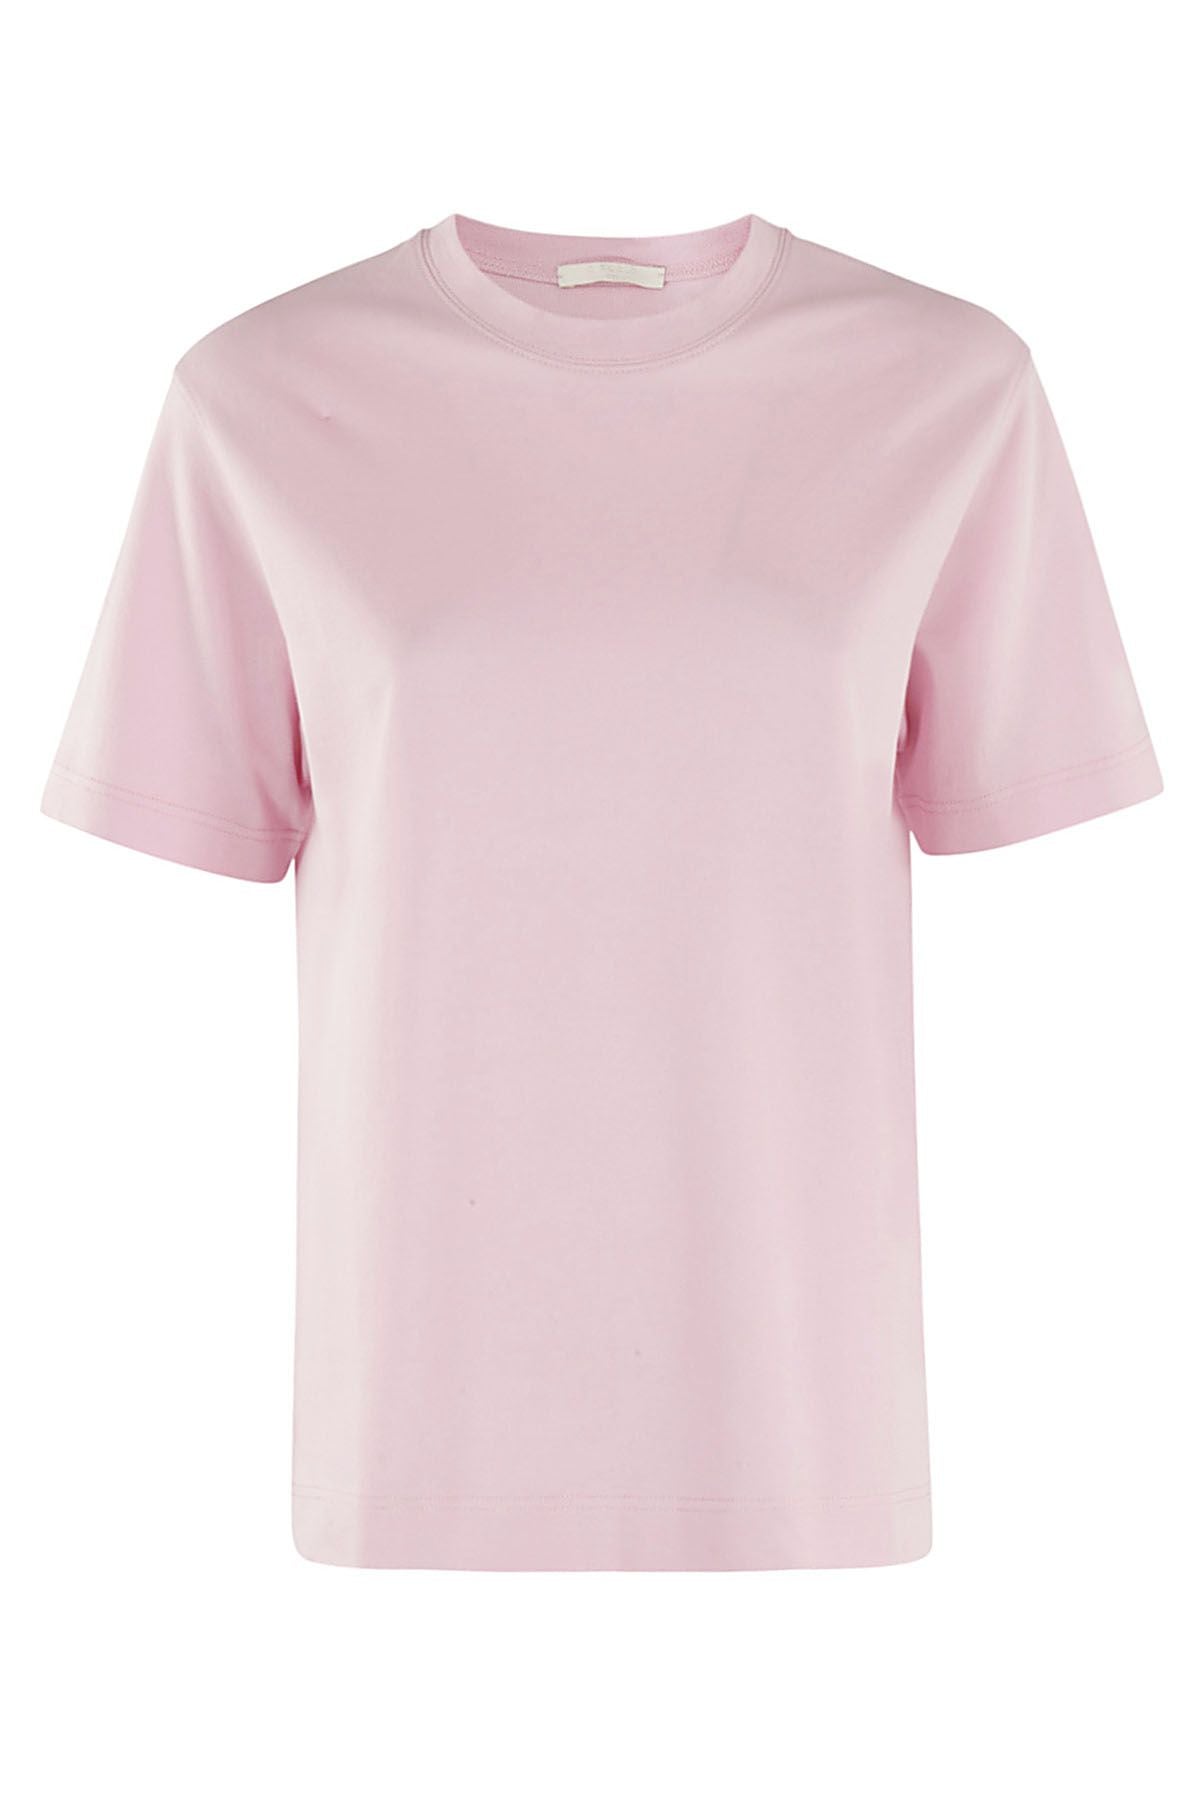 CIRCOLO 1901 - Fard Pink Jersey Cotton T-Shirt CN4300